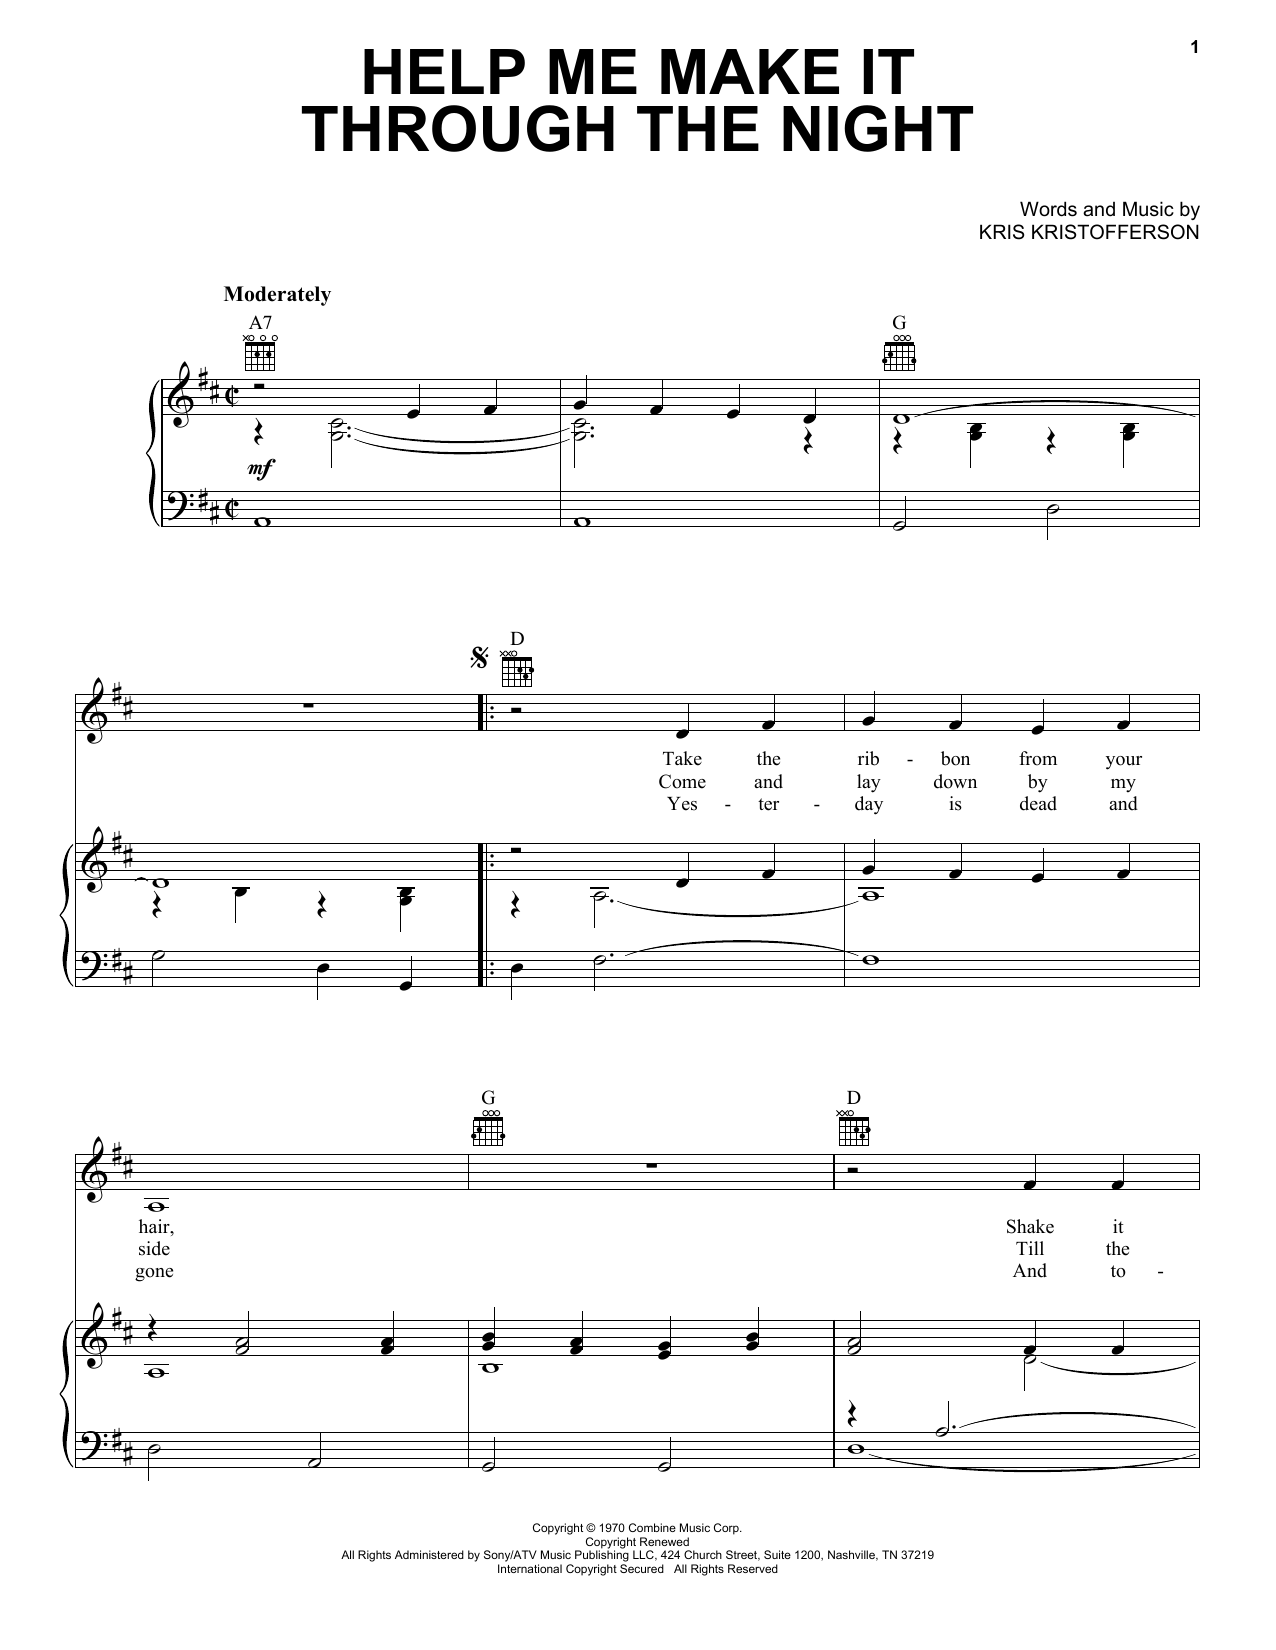 Kris Kristofferson Help Me Make It Through The Night Sheet Music Notes & Chords for Real Book – Melody, Lyrics & Chords - Download or Print PDF